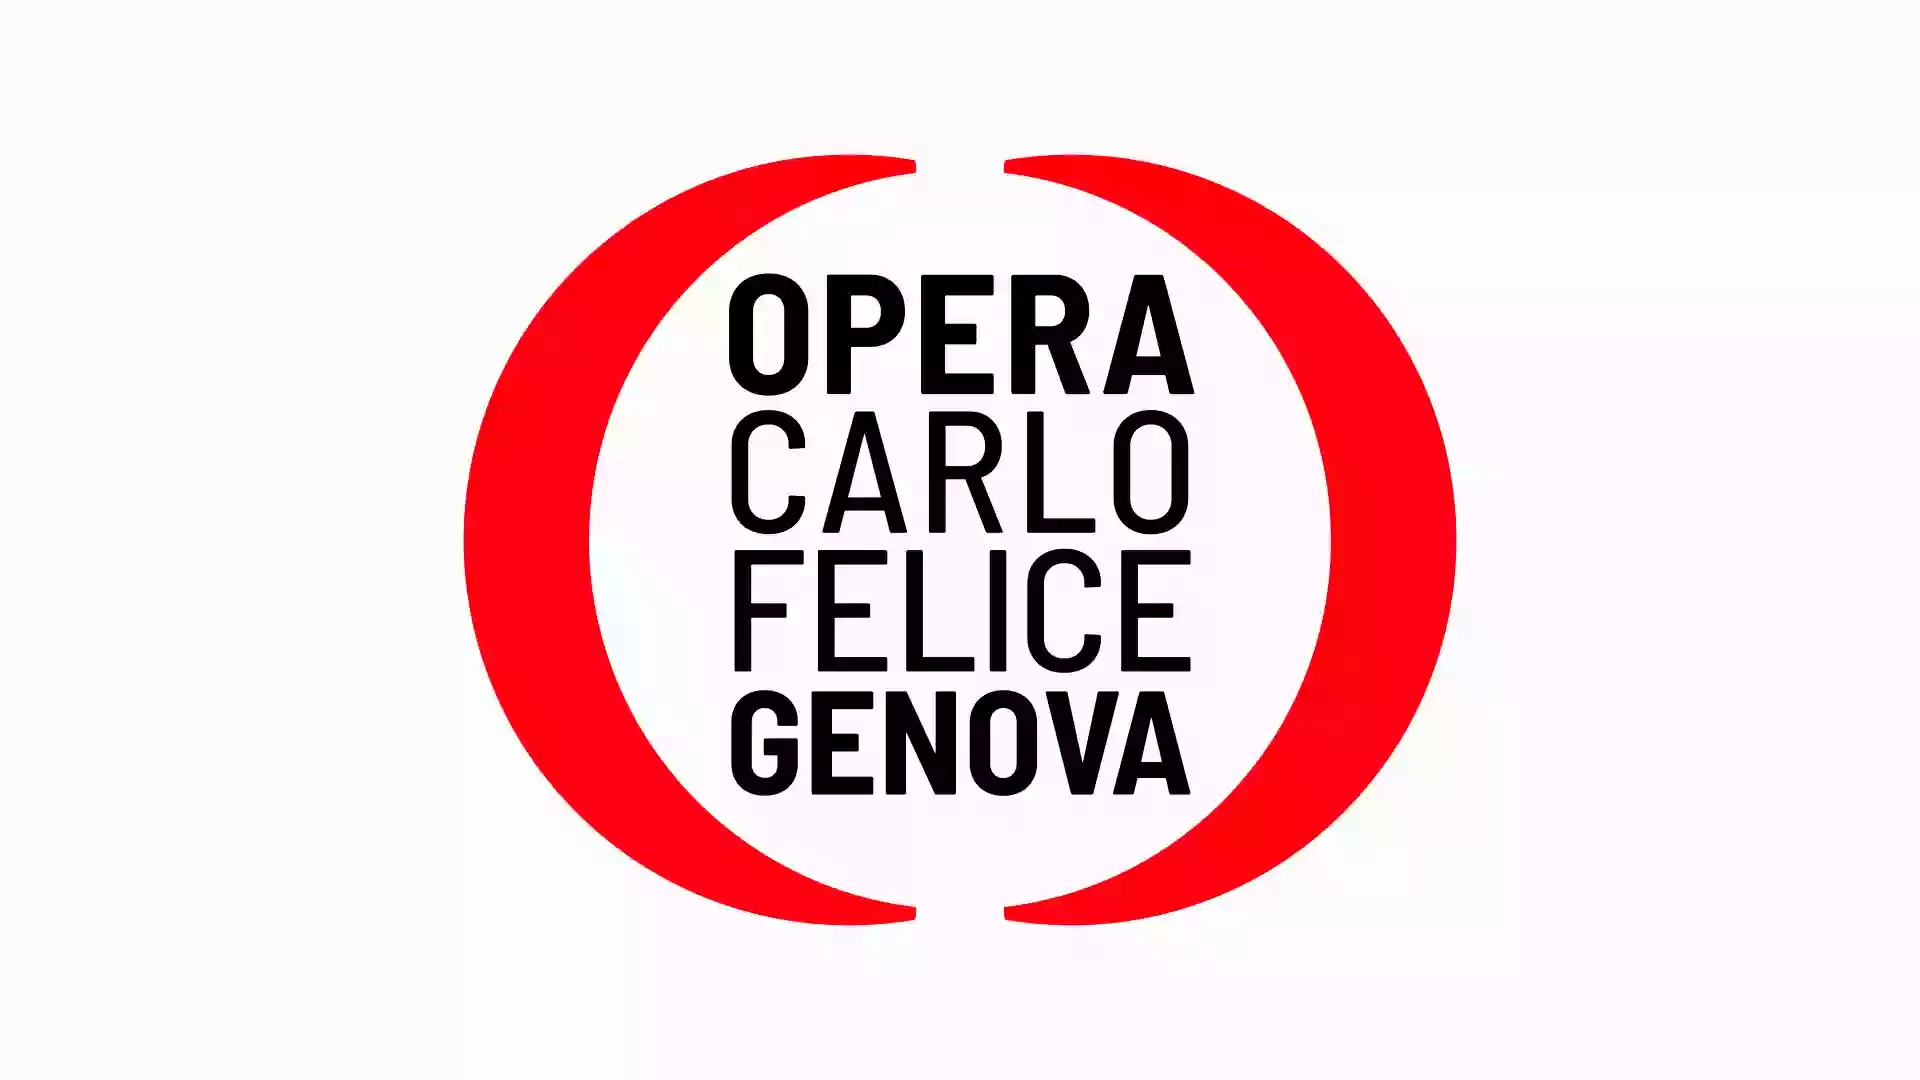 Opera Carlo Felice Genova